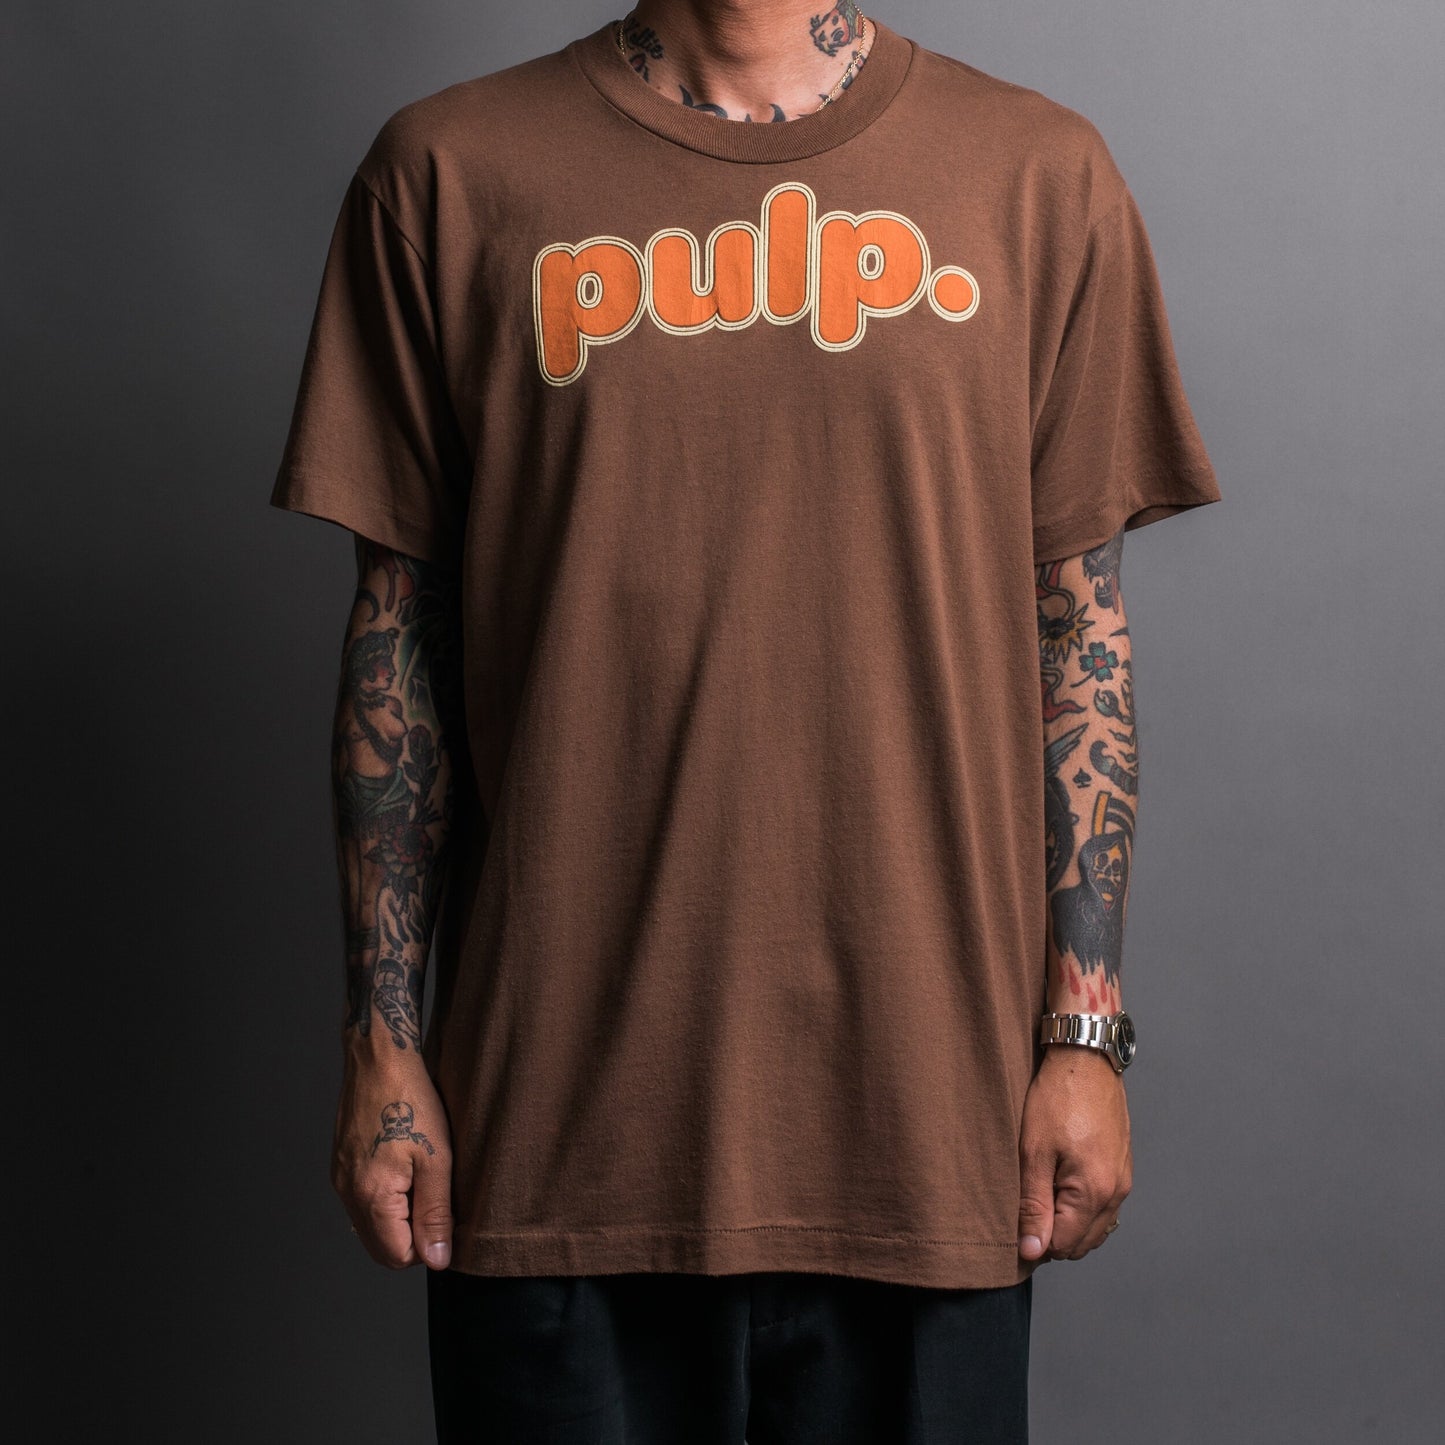 Vintage 90’s Pulp Super Stars T-Shirt